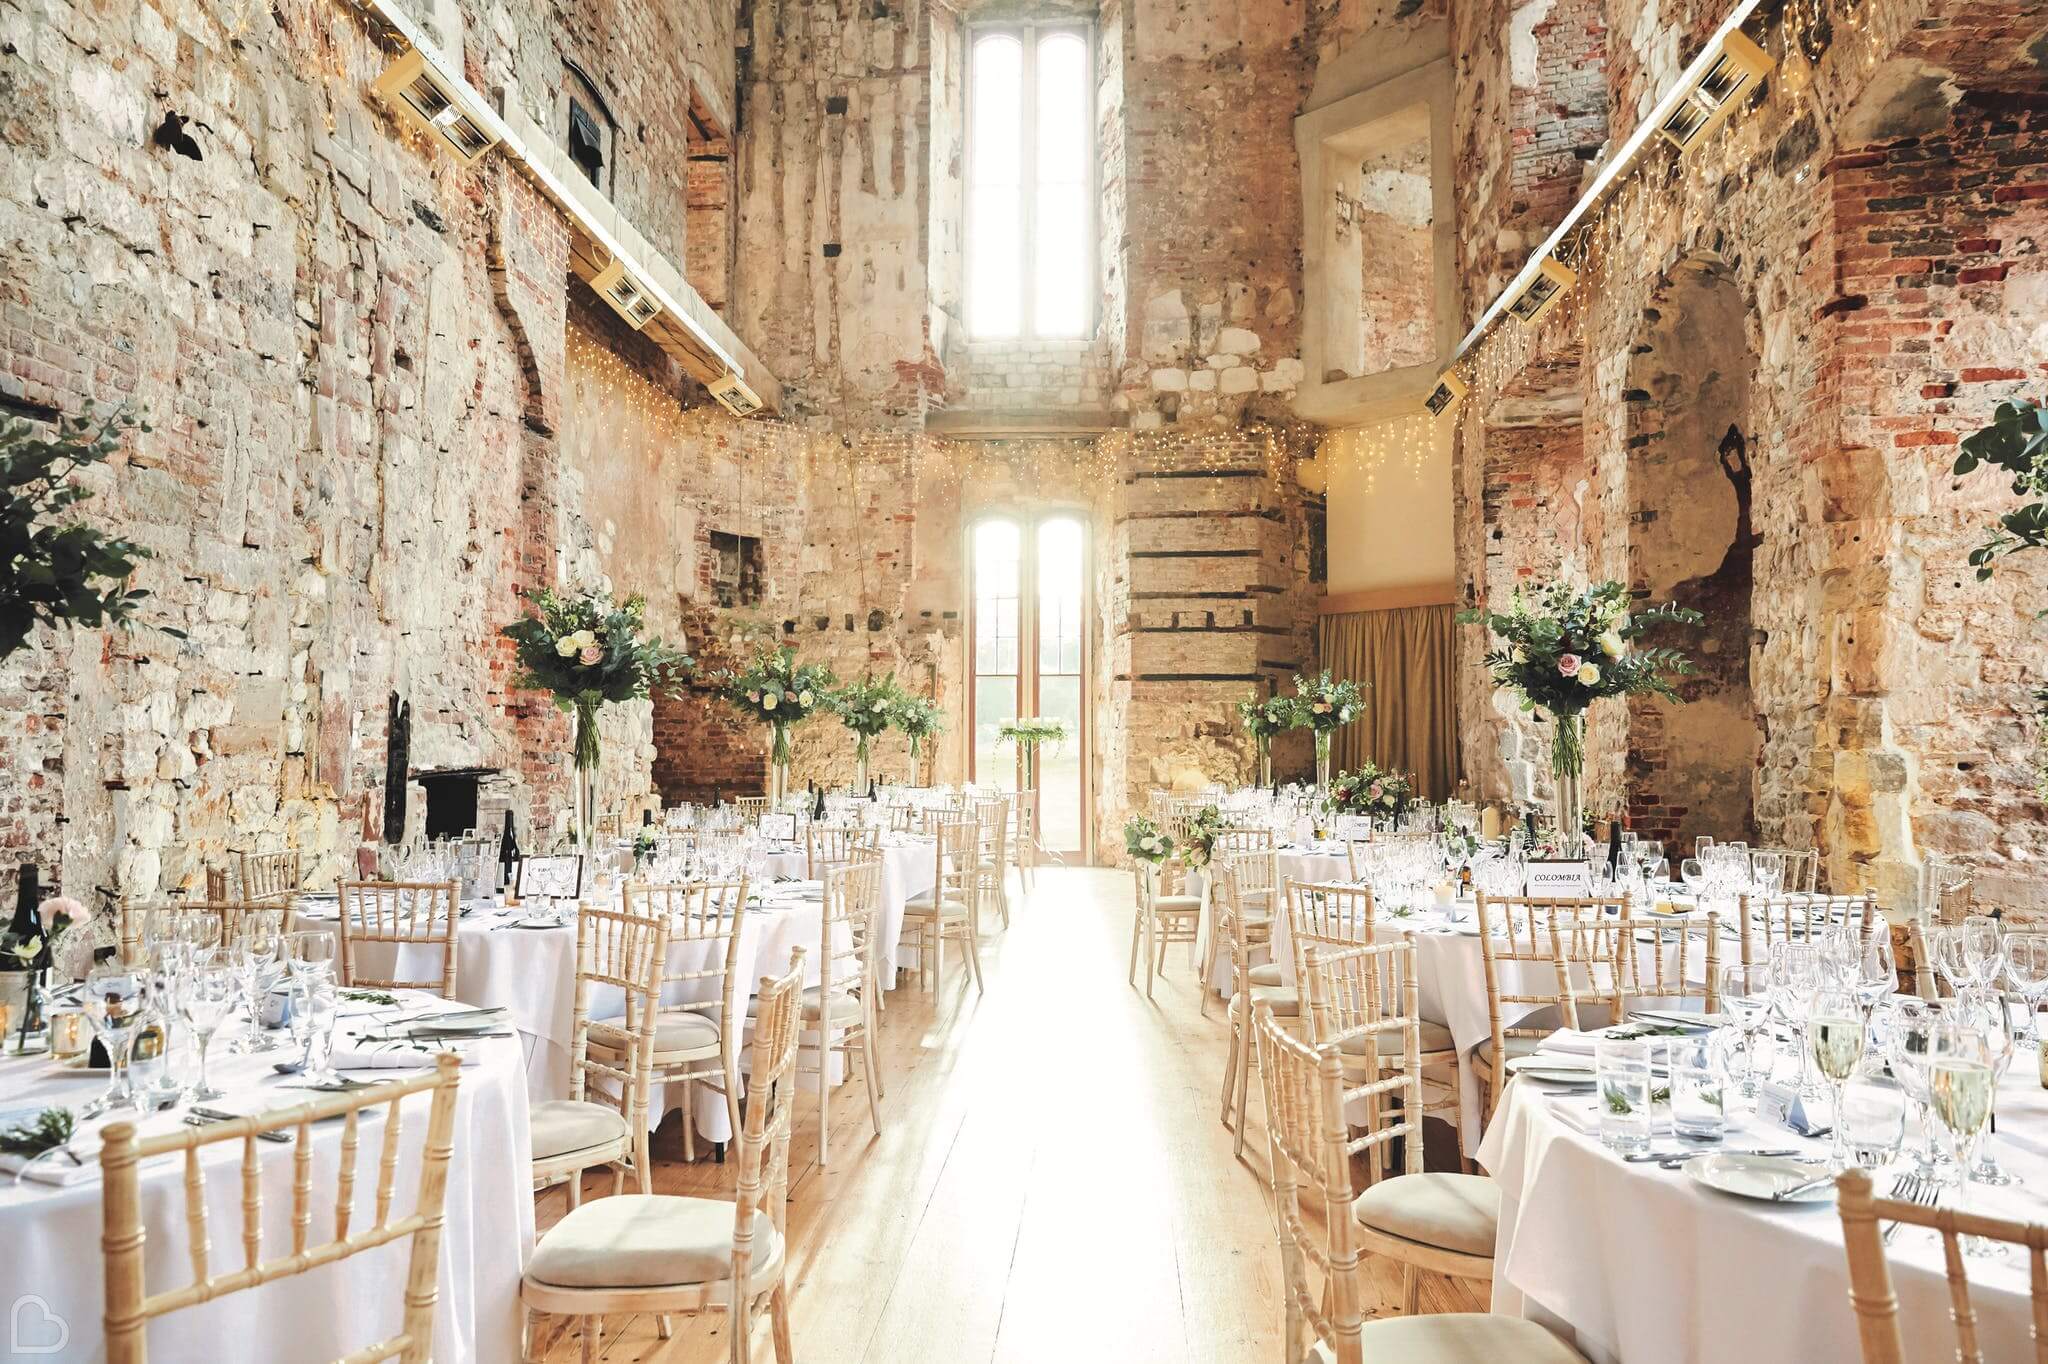 lulworth castle interior set up for a wedding